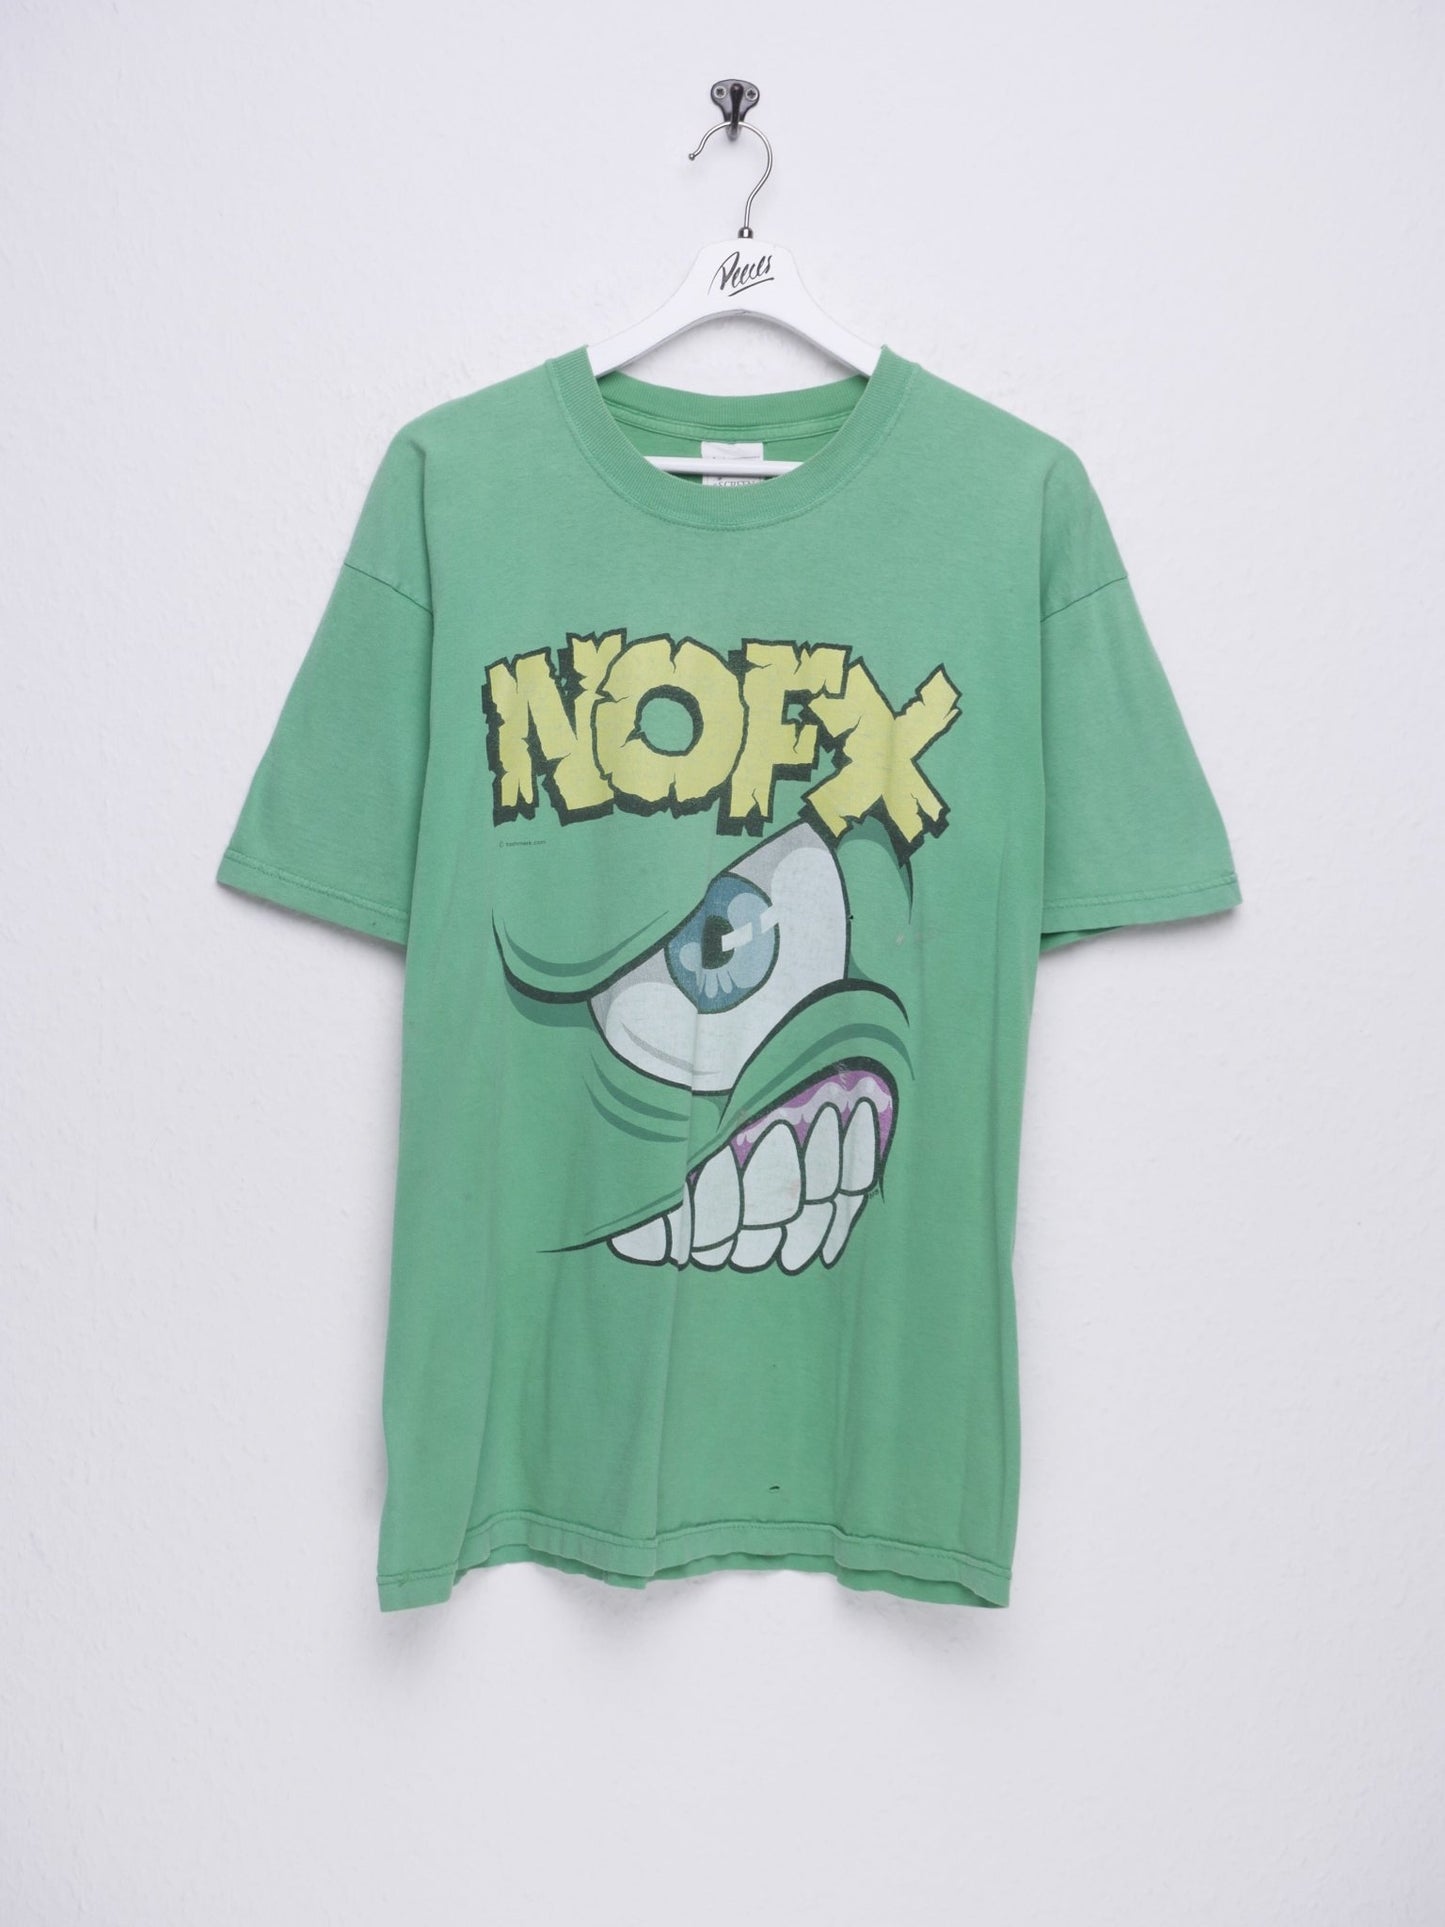 NOFX Mons.Tour printed Logo Shirt - Peeces